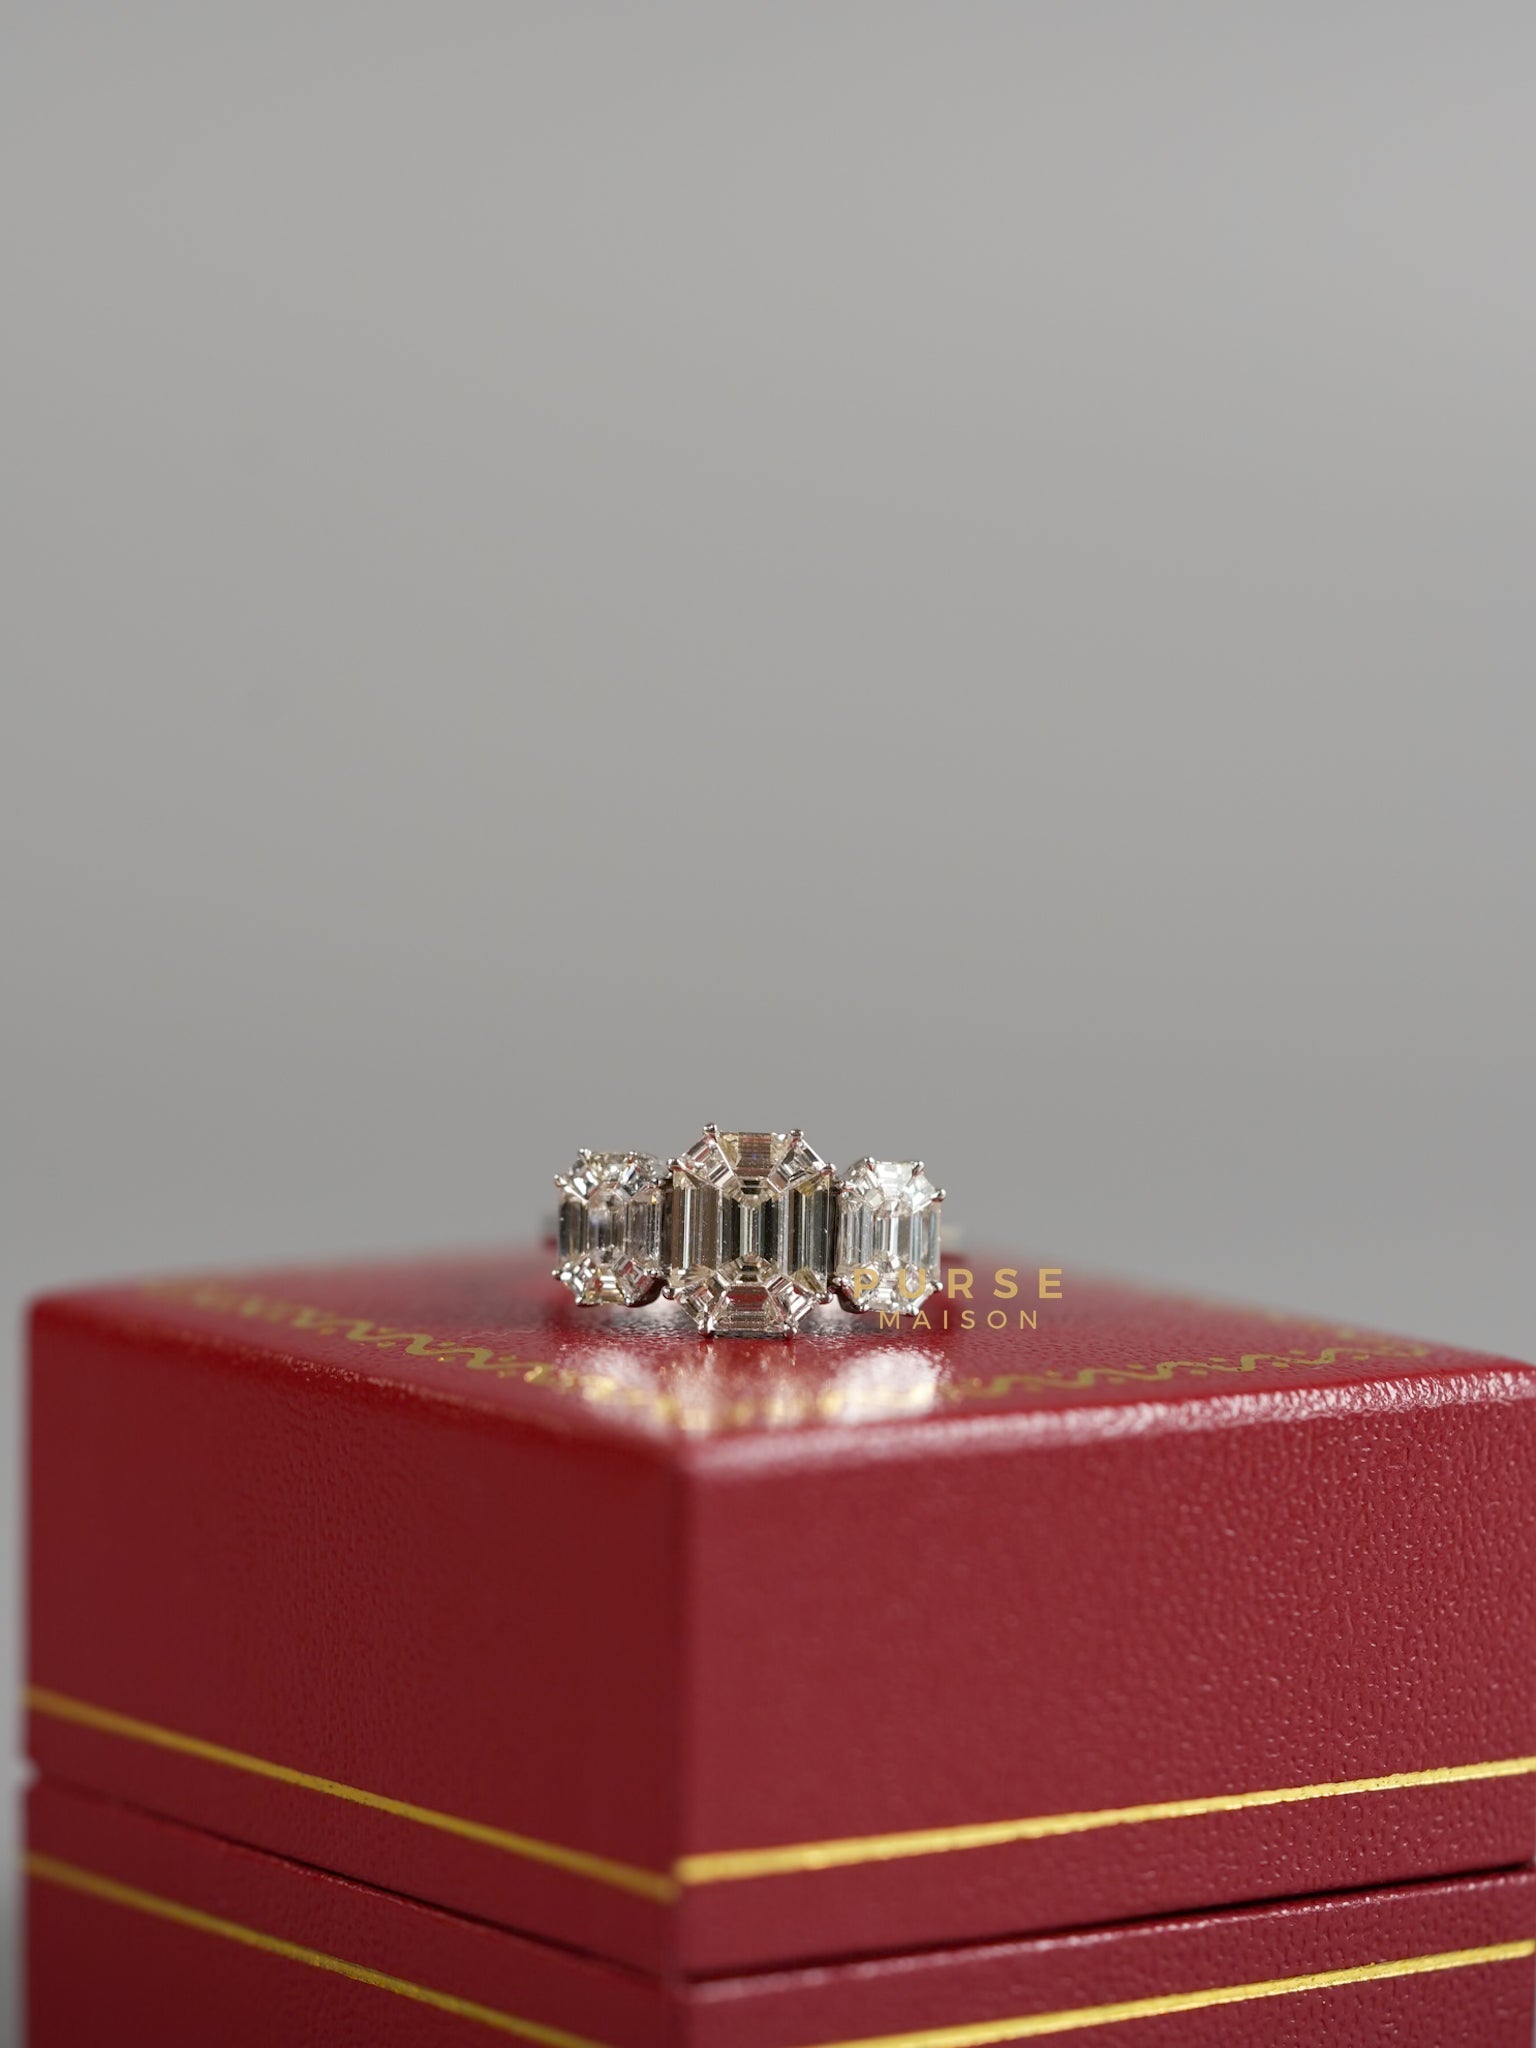 Triple Emerald Cut Ring in 18k White Gold size 6.25 (1.28 CTW) | Purse Maison Luxury Bags Shop